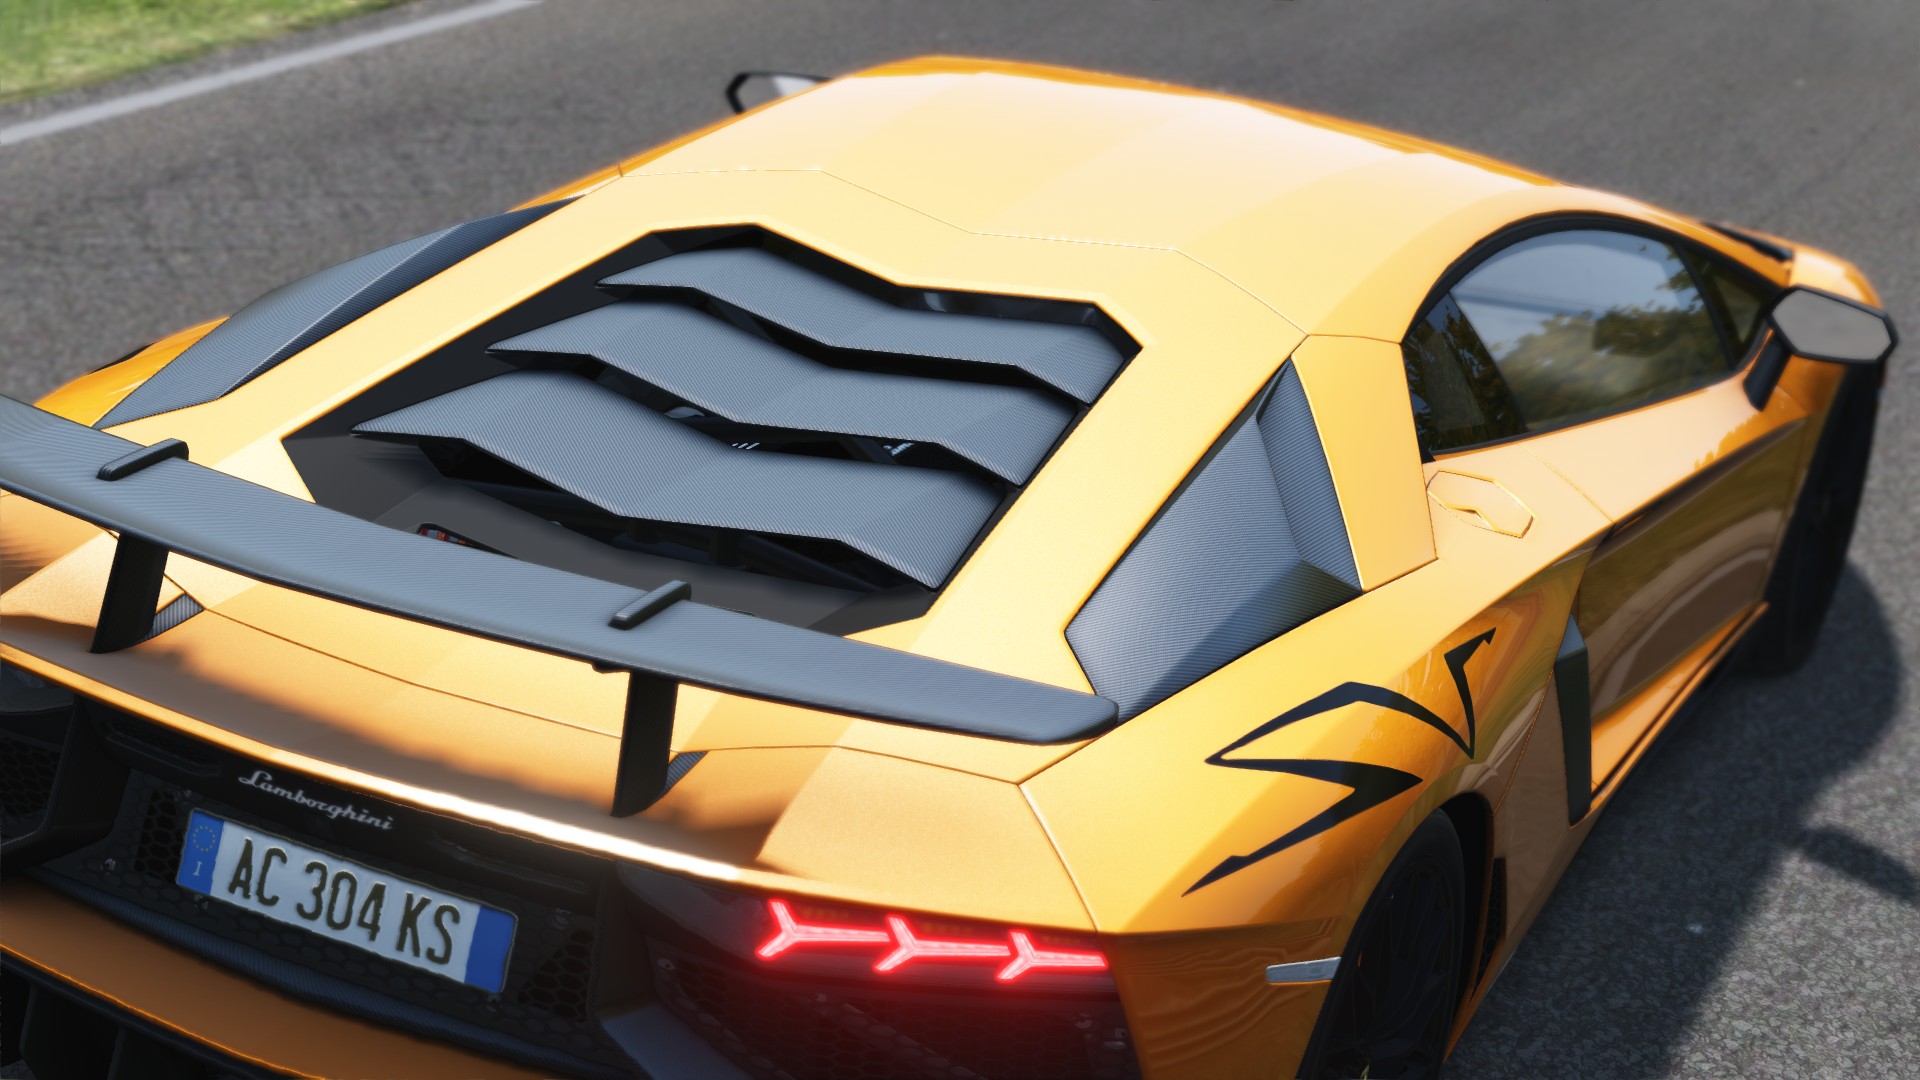 Assetto Corsa, Lamborghini Aventador LP750 4 SV, Nordschleife, Rear view, Car Wallpaper